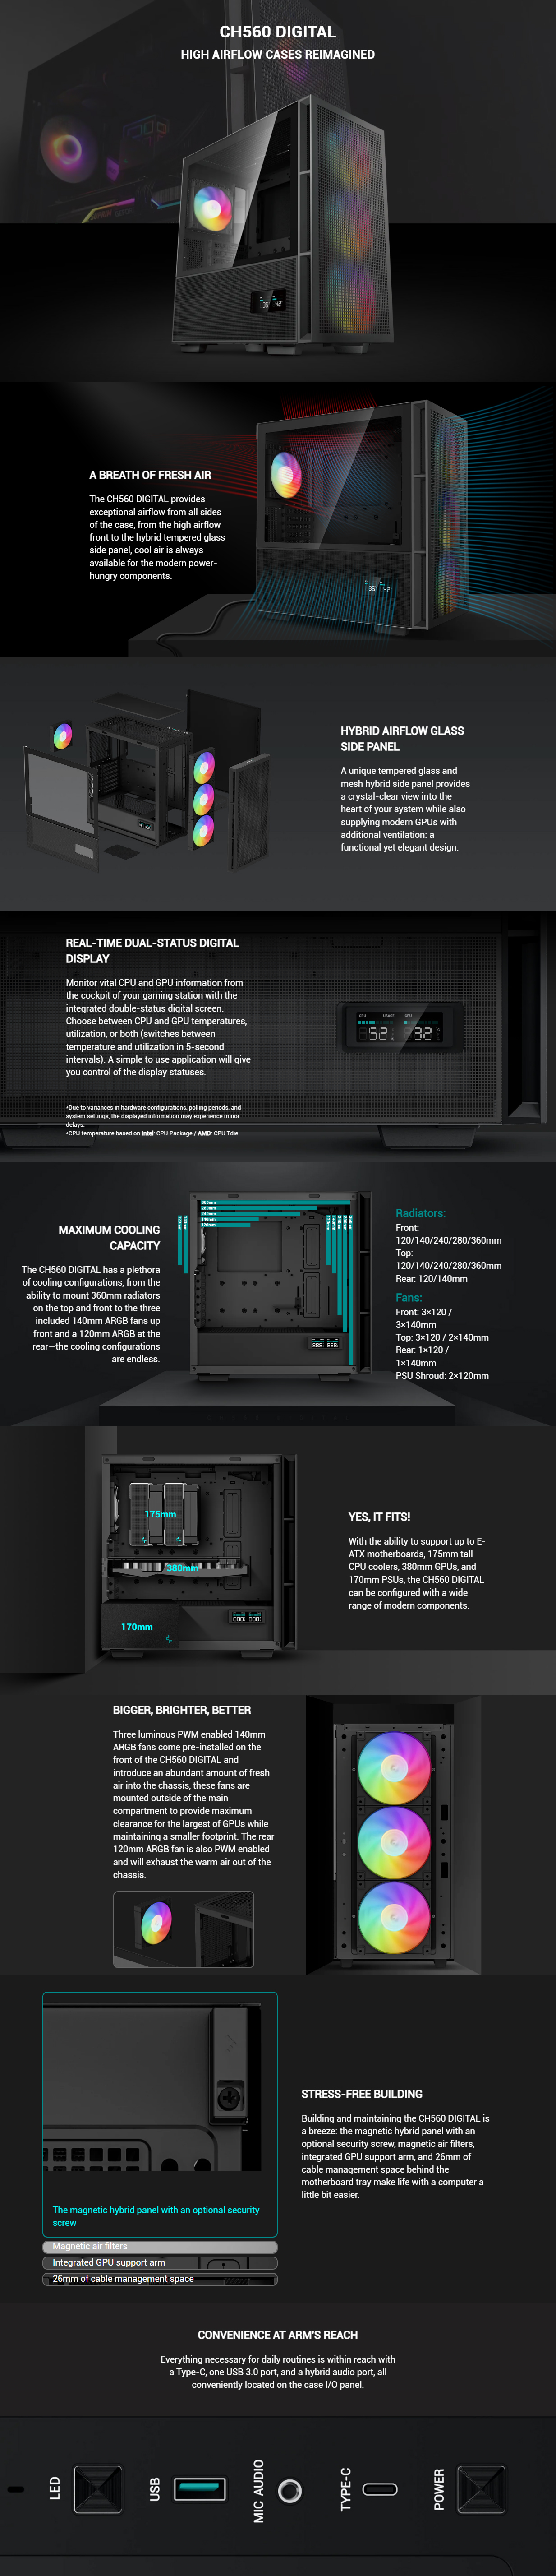 Deepcool-Cases-DeepCool-CH560-Digital-Tempered-Glass-Mid-Tower-E-ATX-Case-Black-1